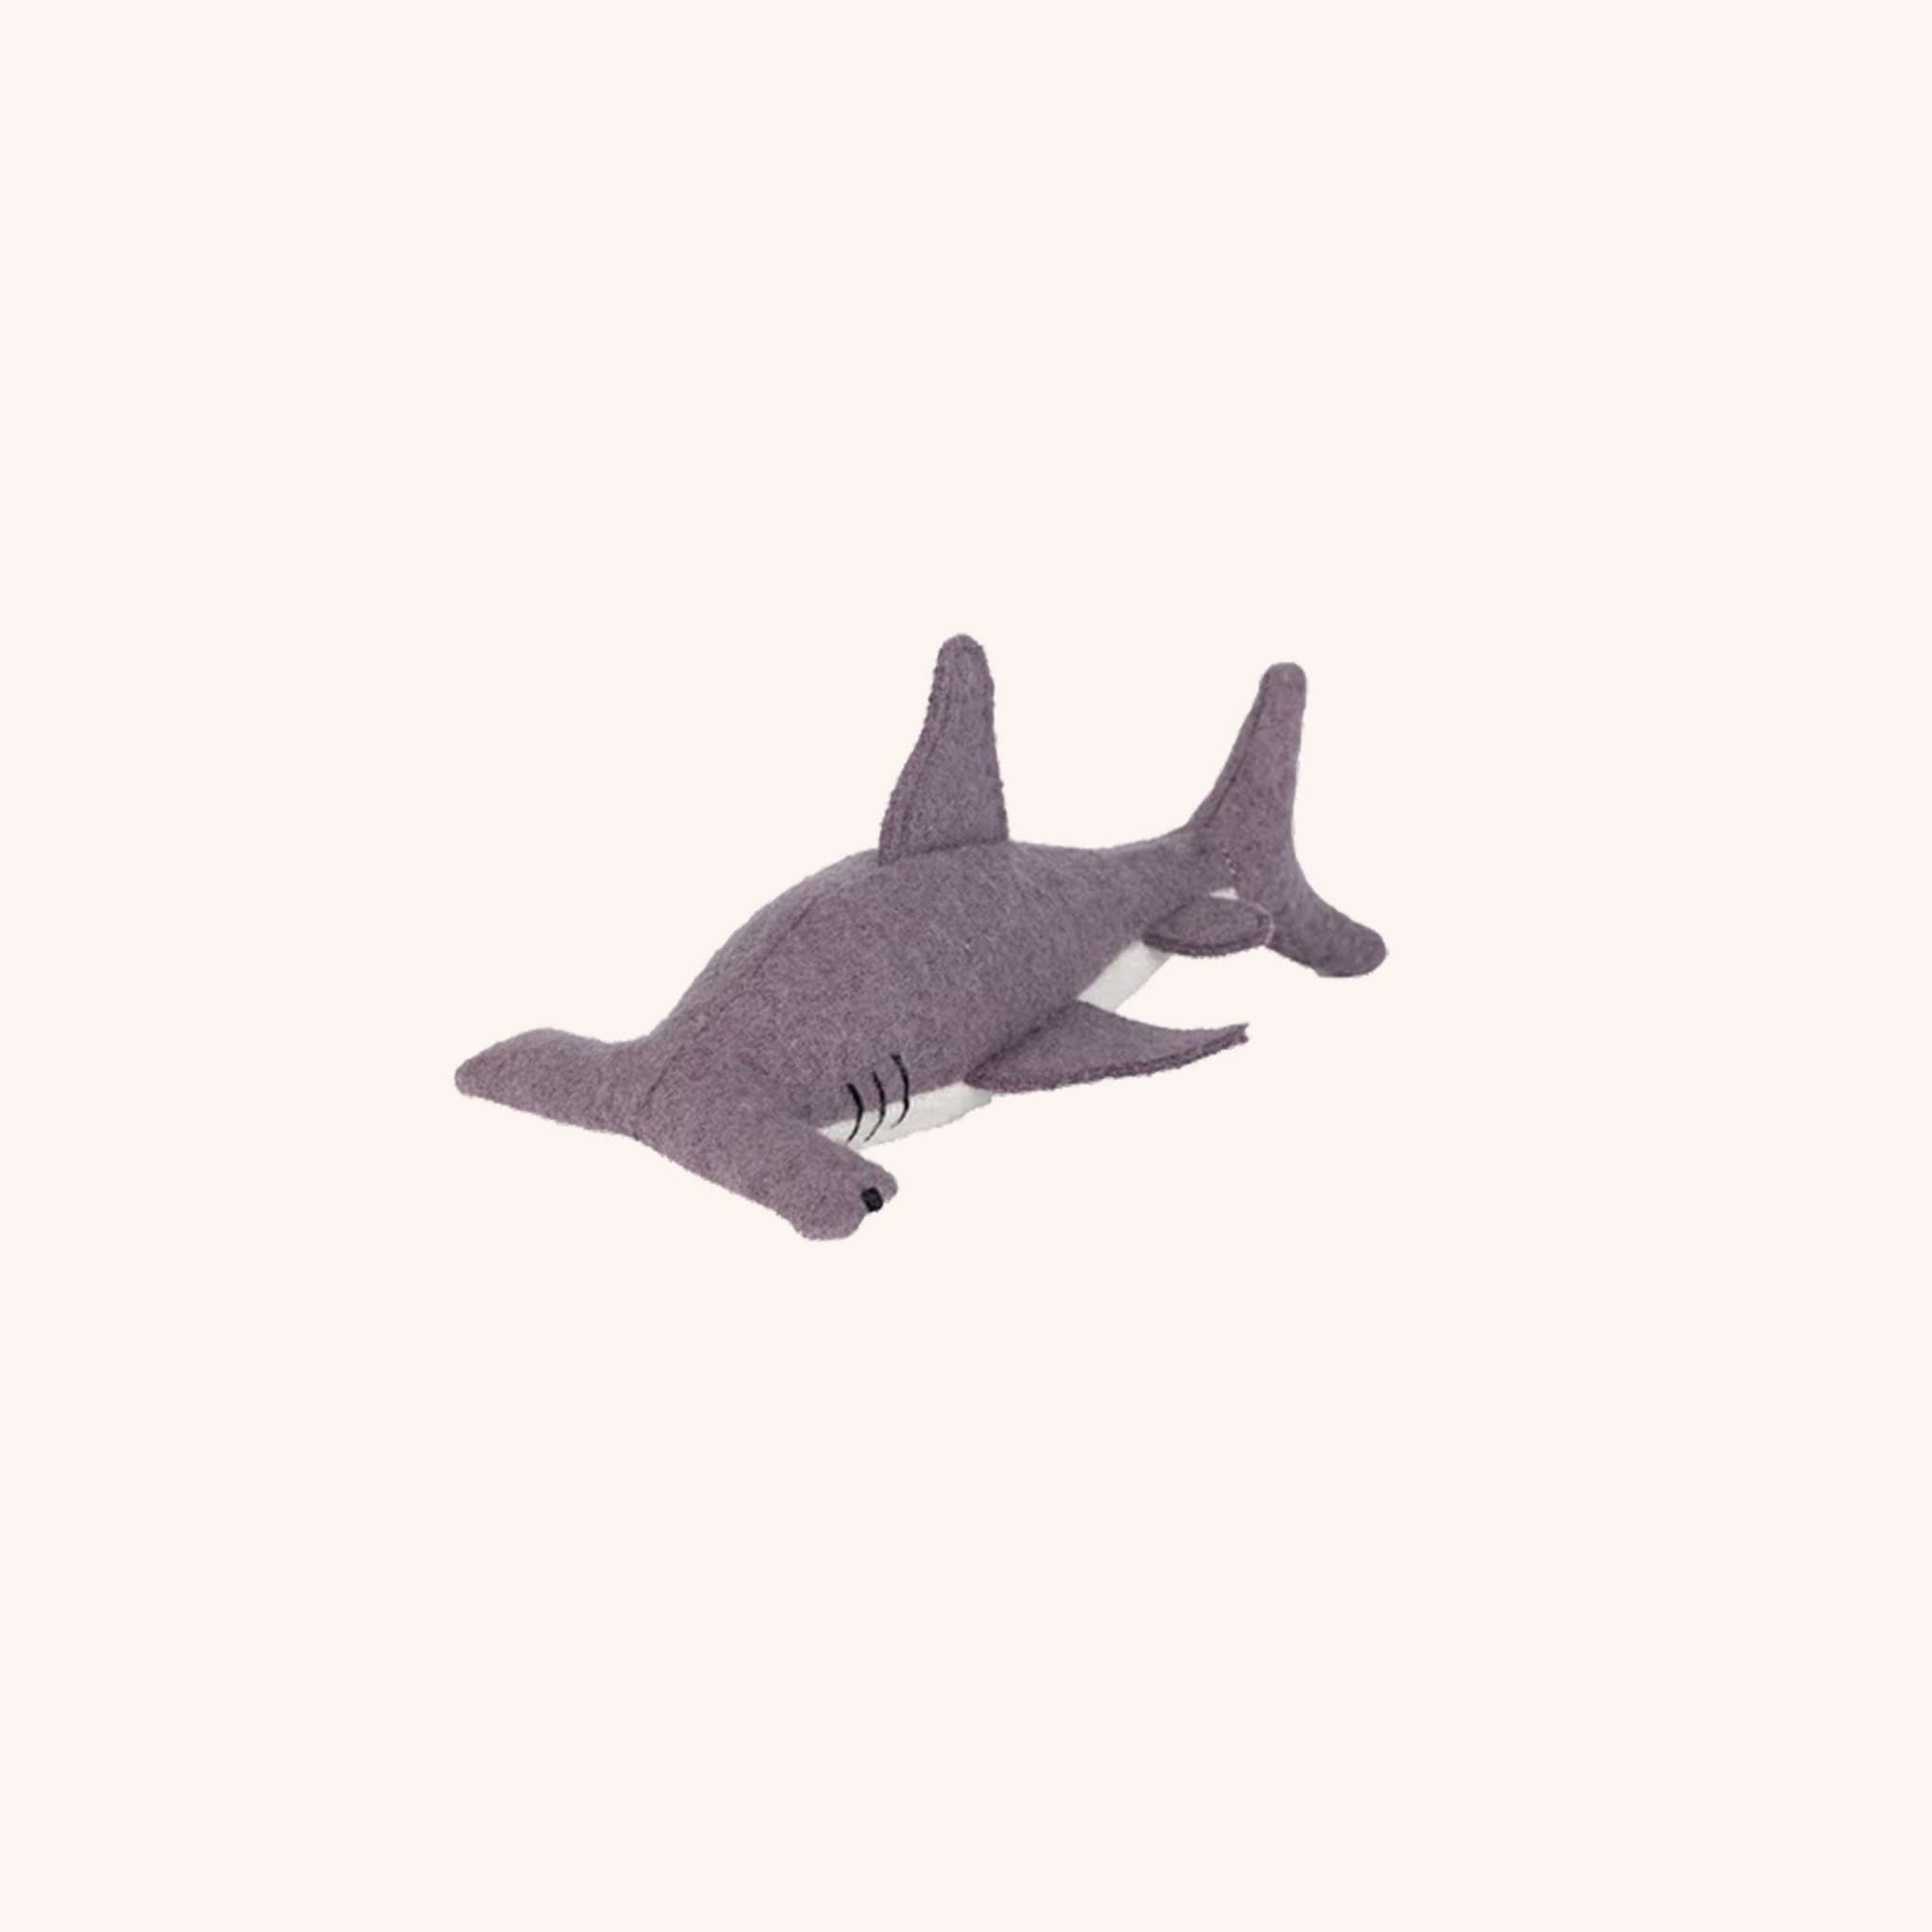 A dark gray and white hammerhead shark stuffed toy.